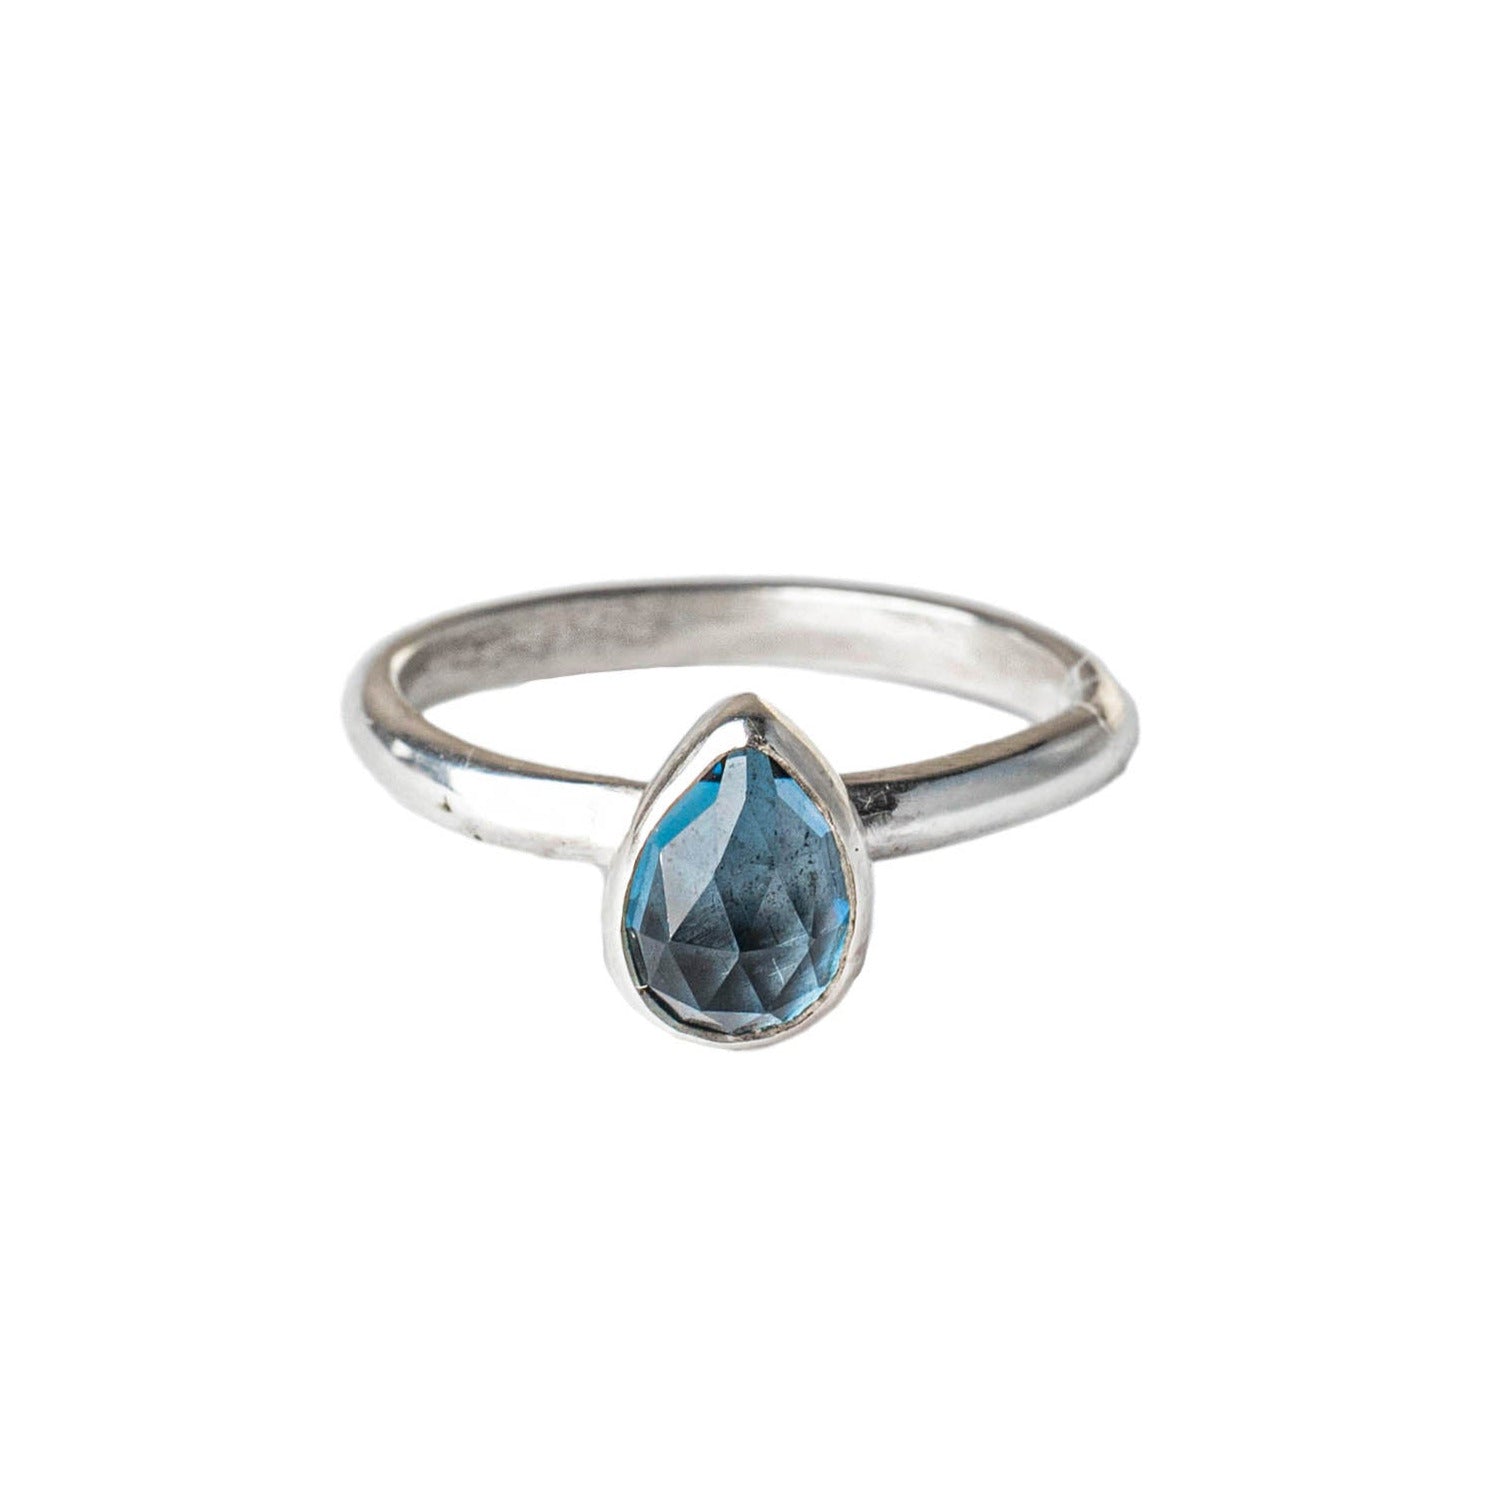 London Blue Topaz Gemstone Prear Sterling Silver Ring on white background 